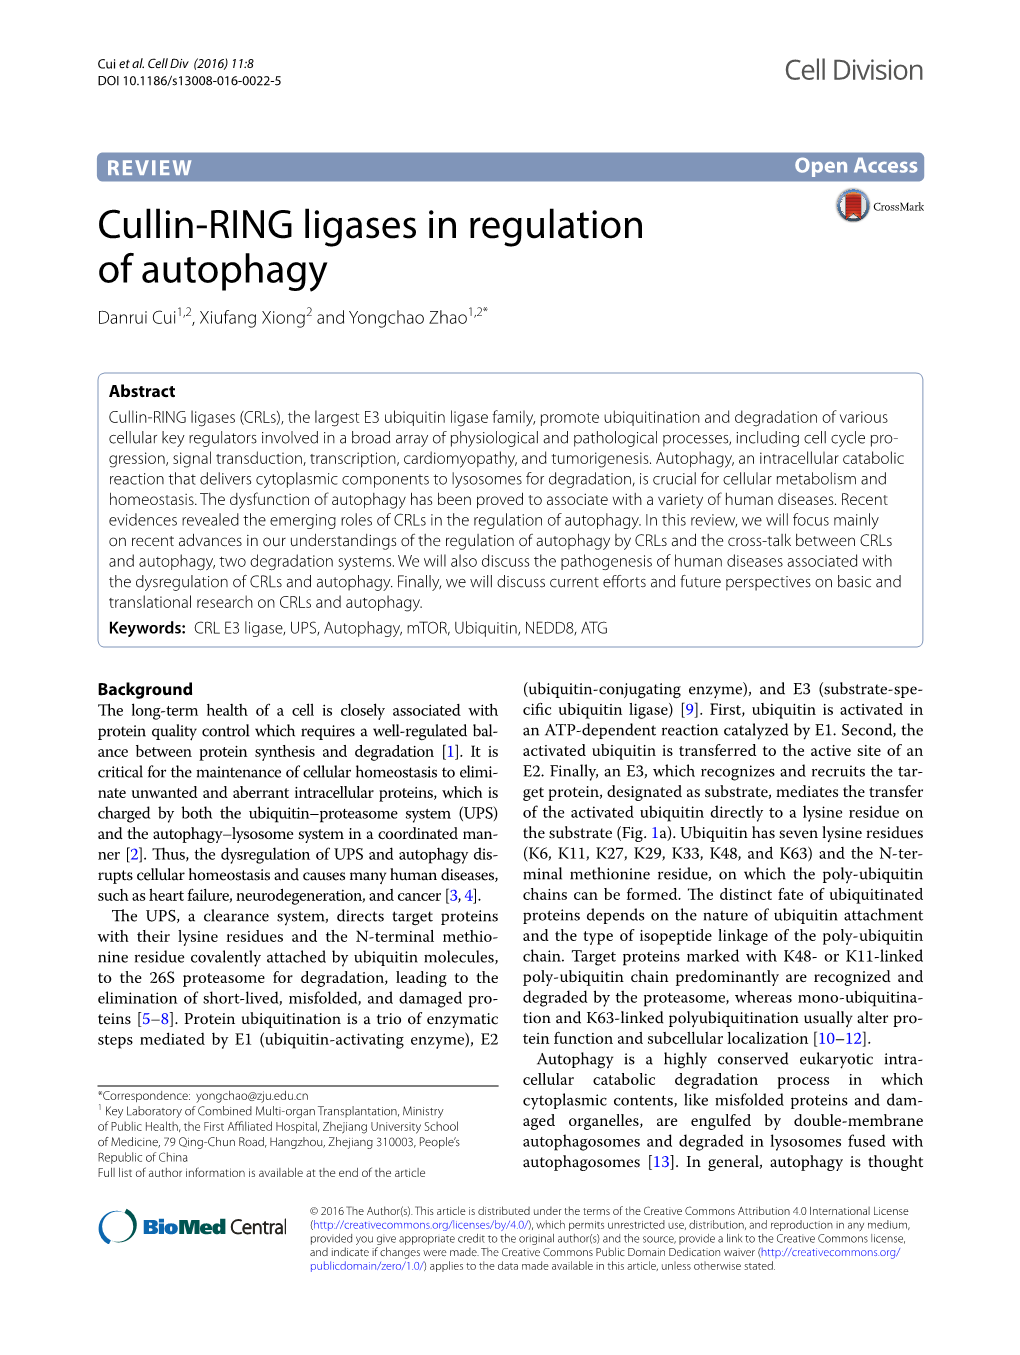 Cullin-RING Ligases in Regulation of Autophagy